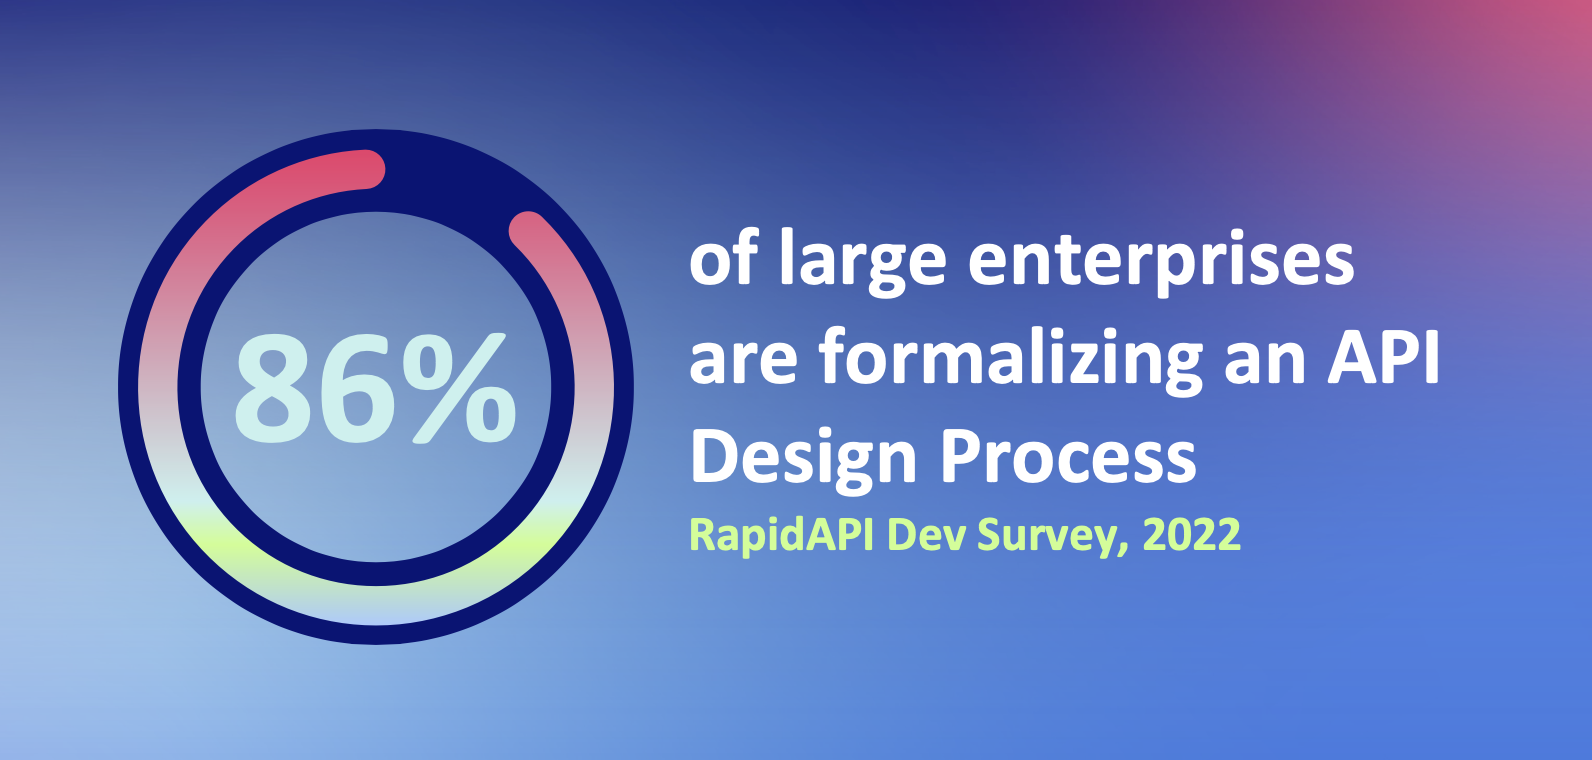 86% of large enterprises are formalizing an API Design Process